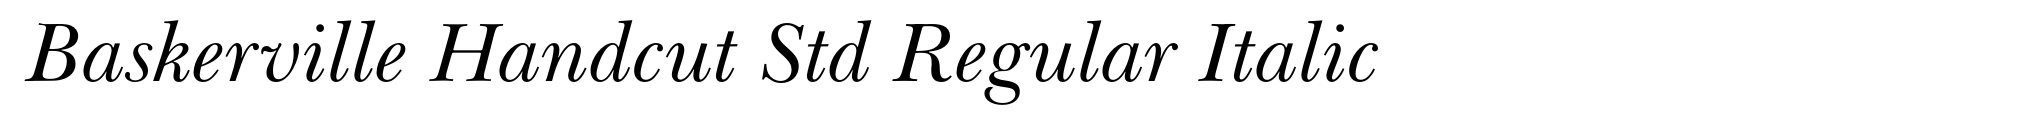 Baskerville Handcut Std Regular Italic image